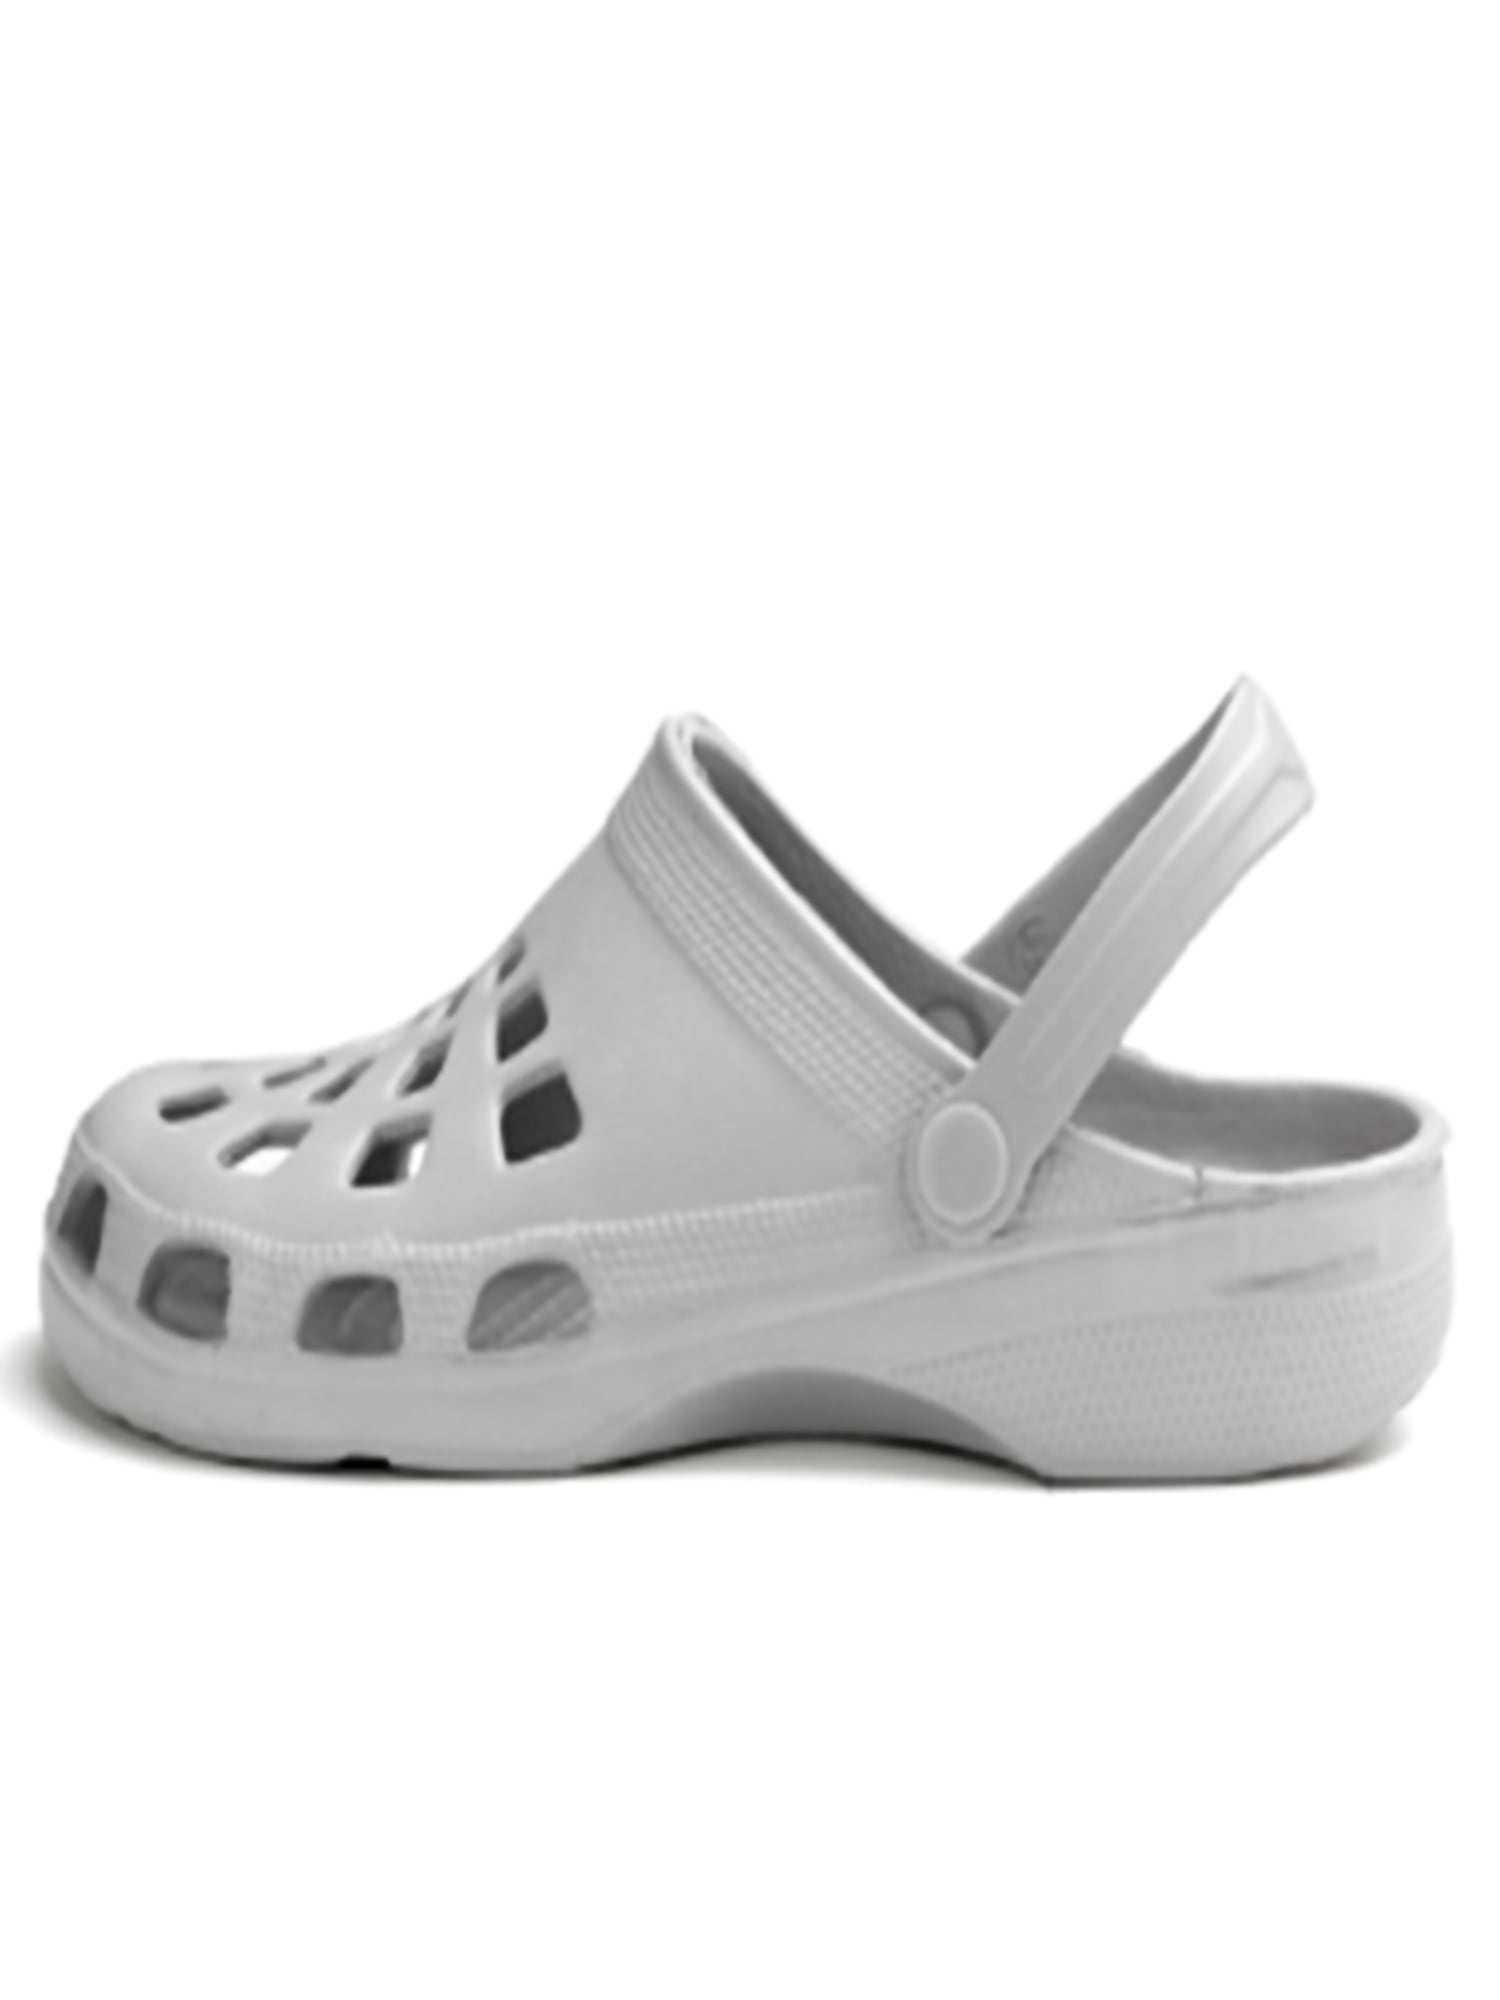 Imagine Age Unisex Garden Clogs Shoes Shower Sandals Slippers